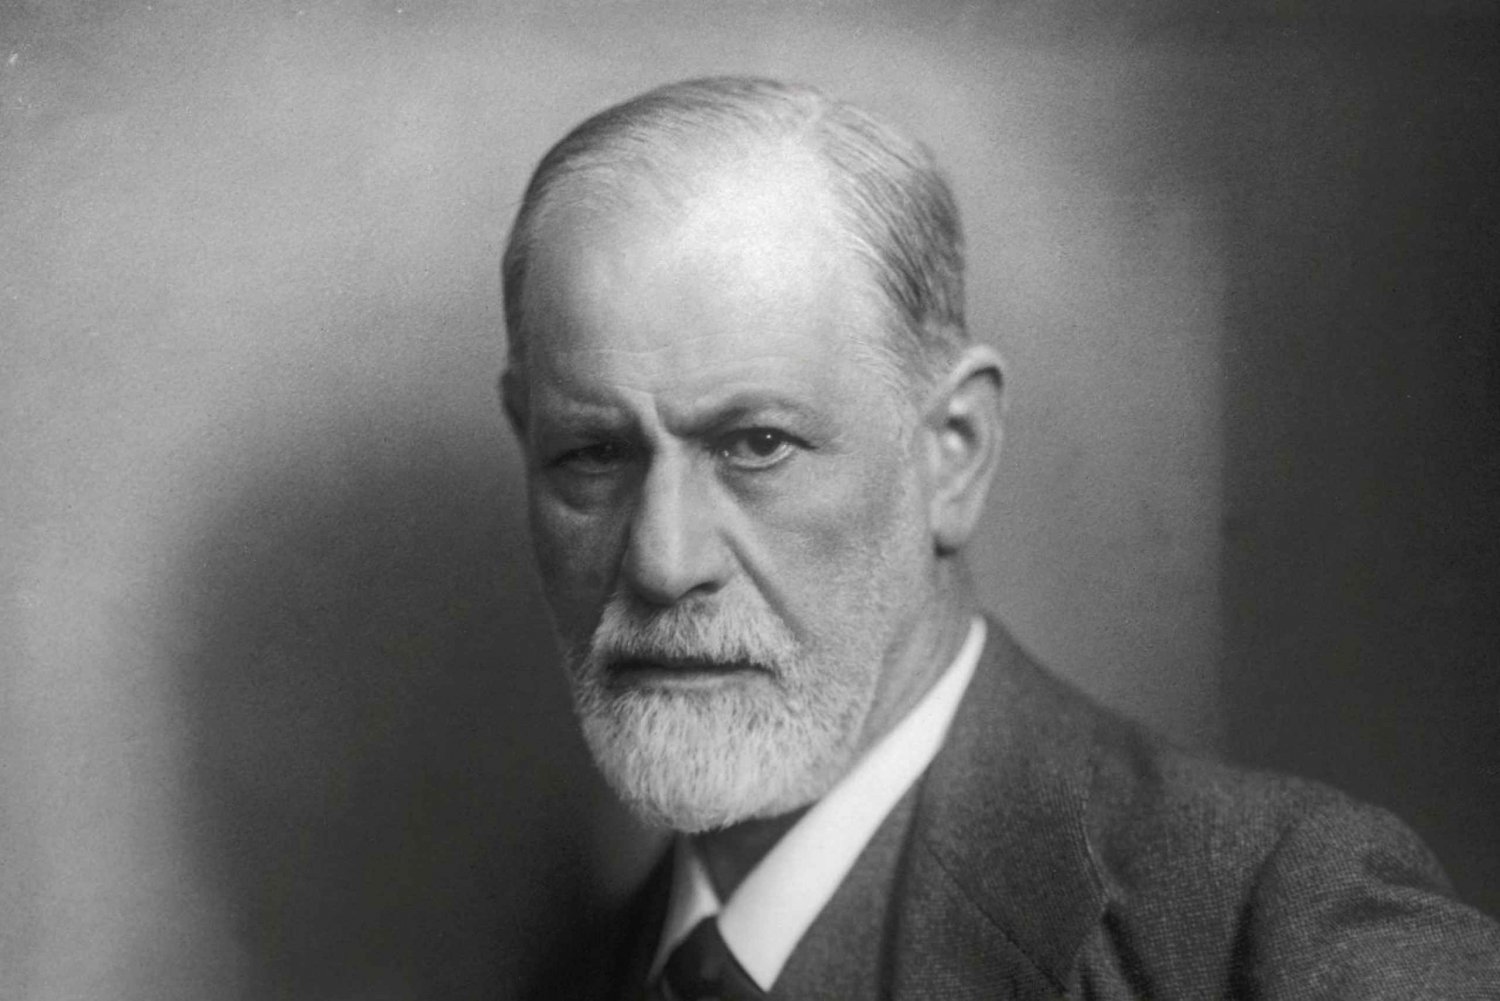 Viena: ingresso para o Museu Sigmund Freud